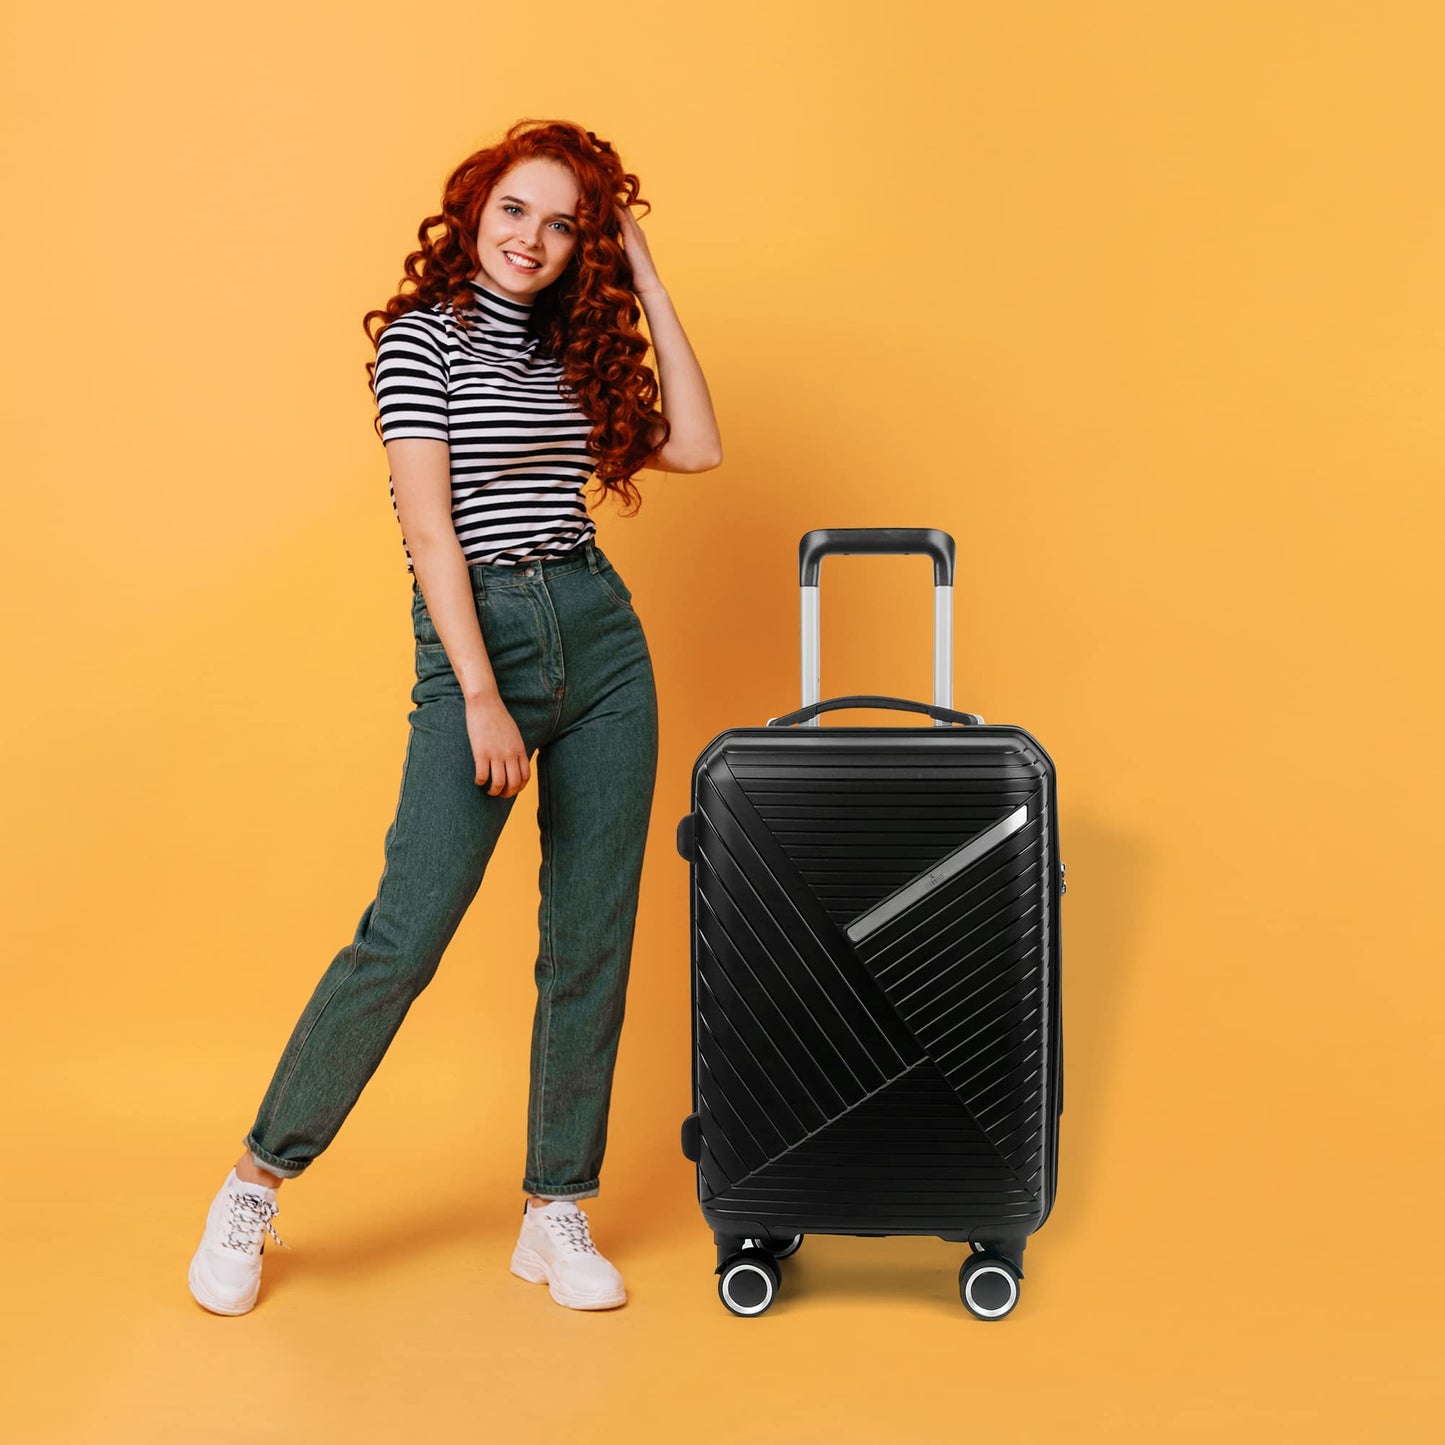 THE CLOWNFISH Denzel Series Luggage Polypropylene Hard Case Suitcase Eight Wheel Trolley Bag with TSA Lock-Teal (Medium size, 66 cm-26 inch)